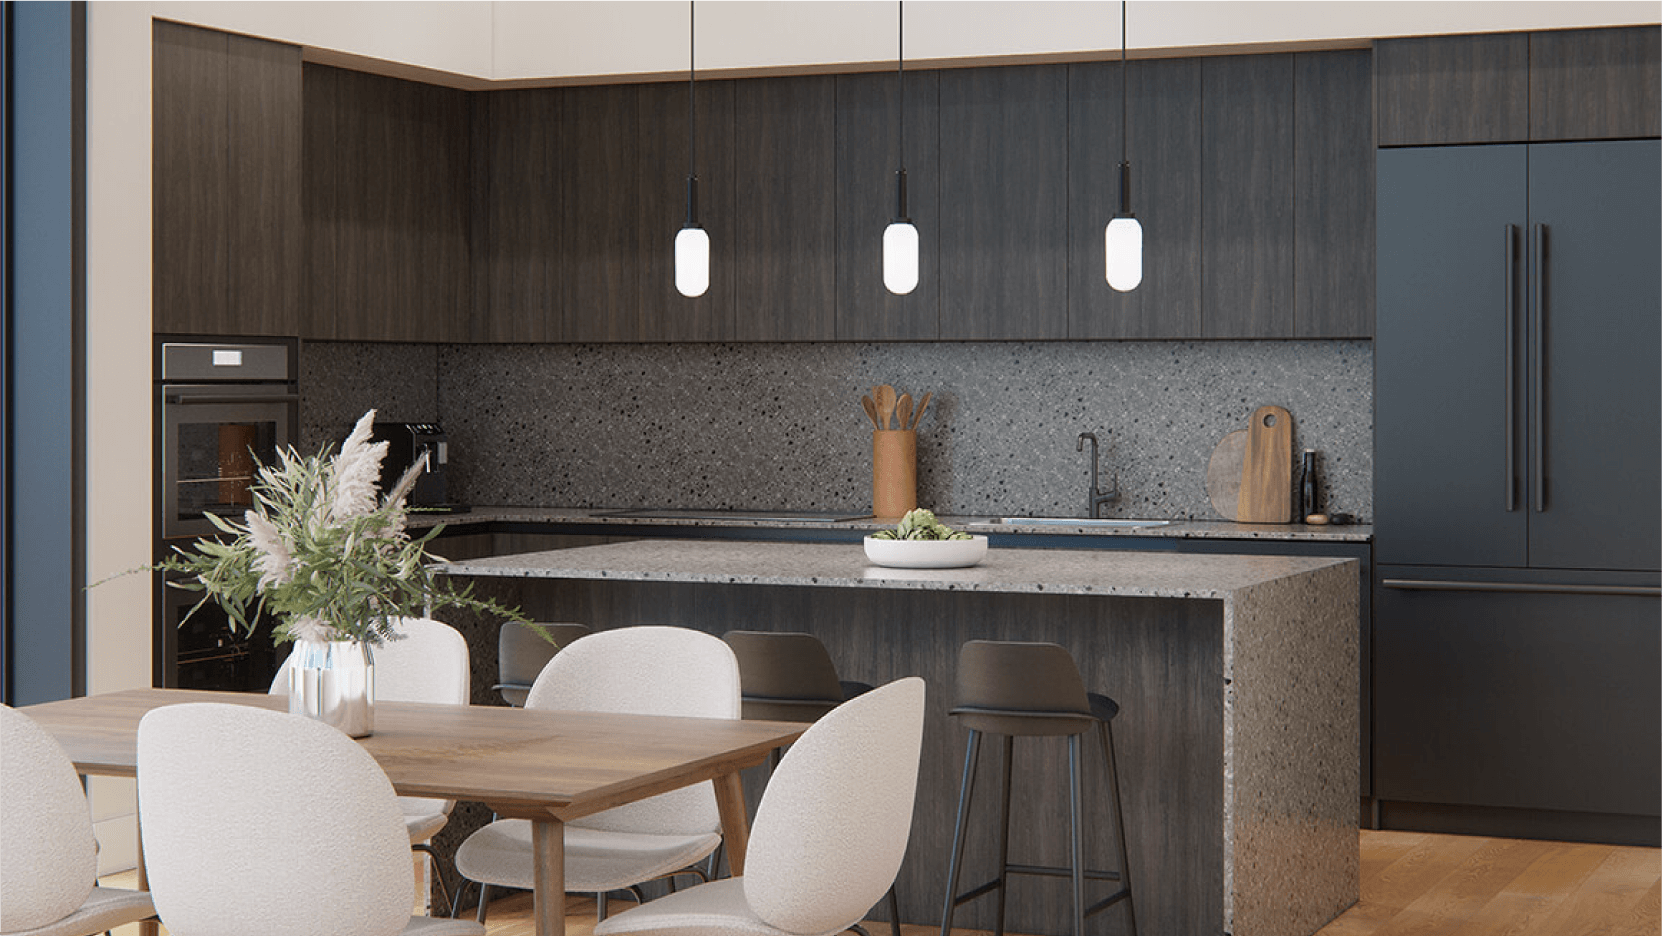 Vesper ATX Condos offer sleek kitchen designs featuring dark wooden cabinets, modern appliances, and a kitchen island with bar stools, offering stunning views of Austin's skyline through large windows.